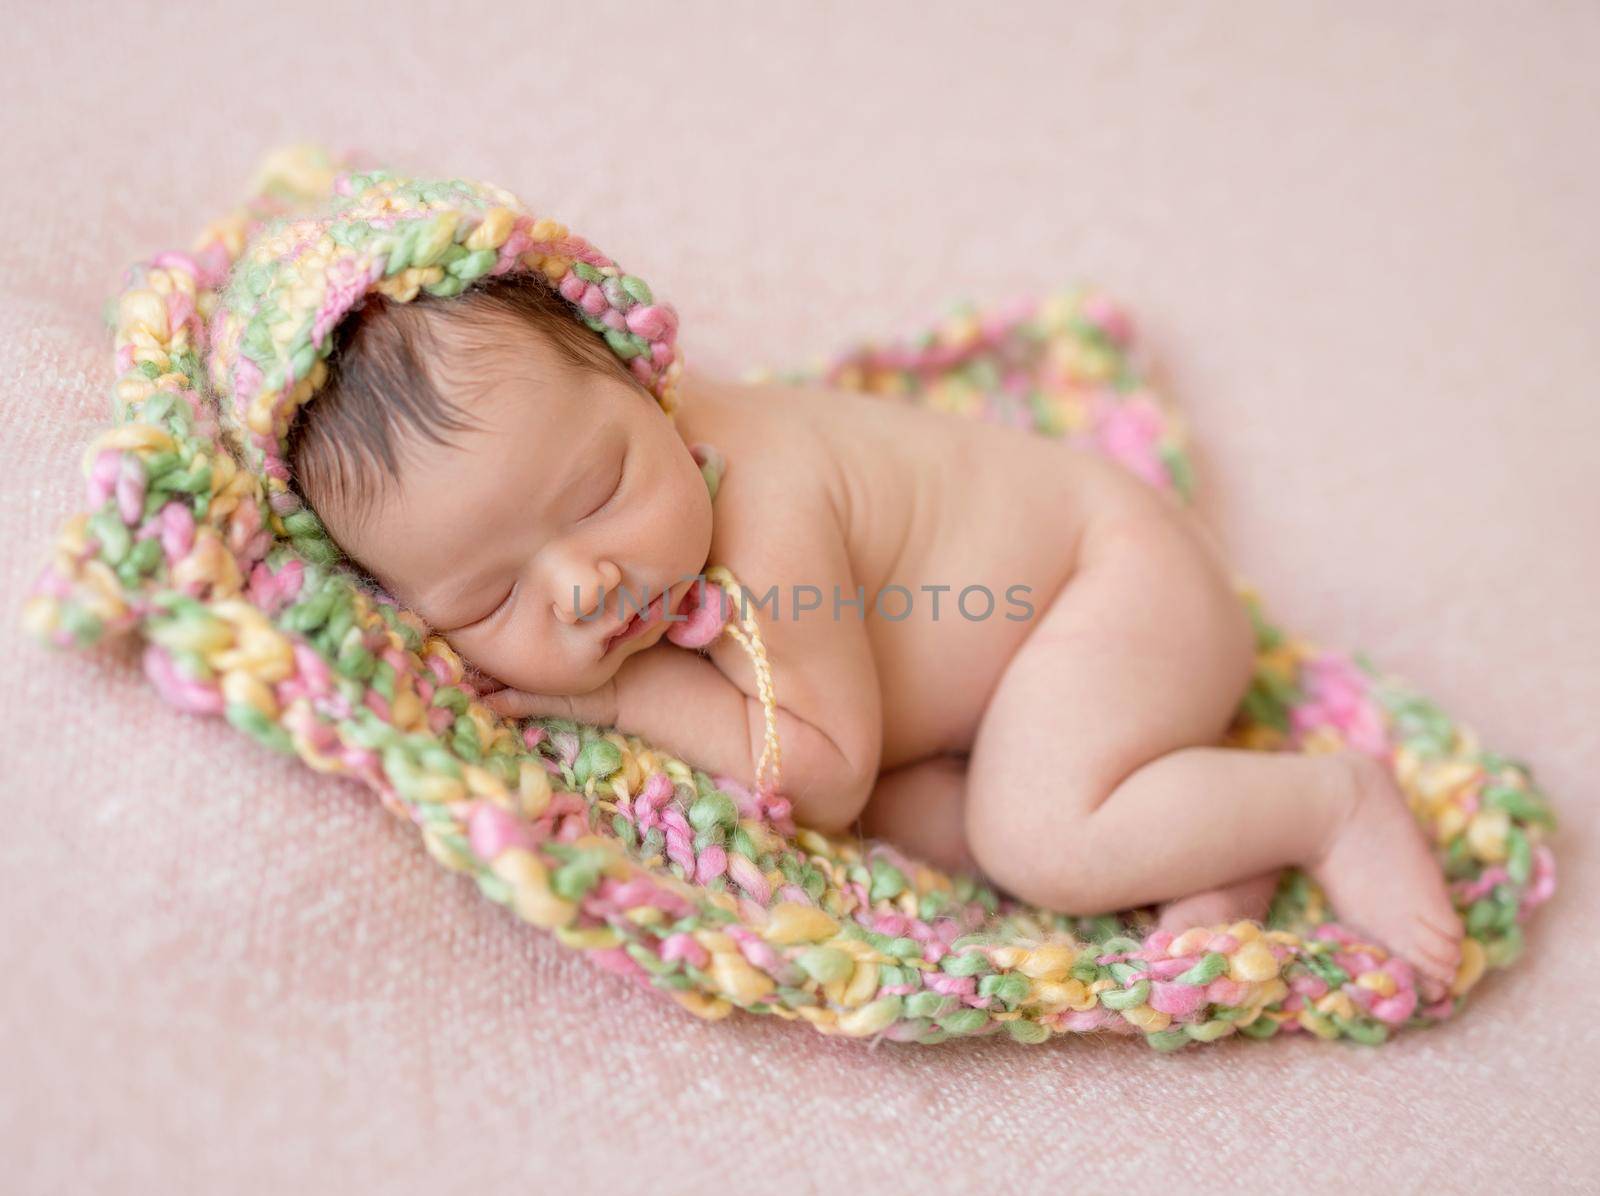 sleeping newborn baby girl by tan4ikk1